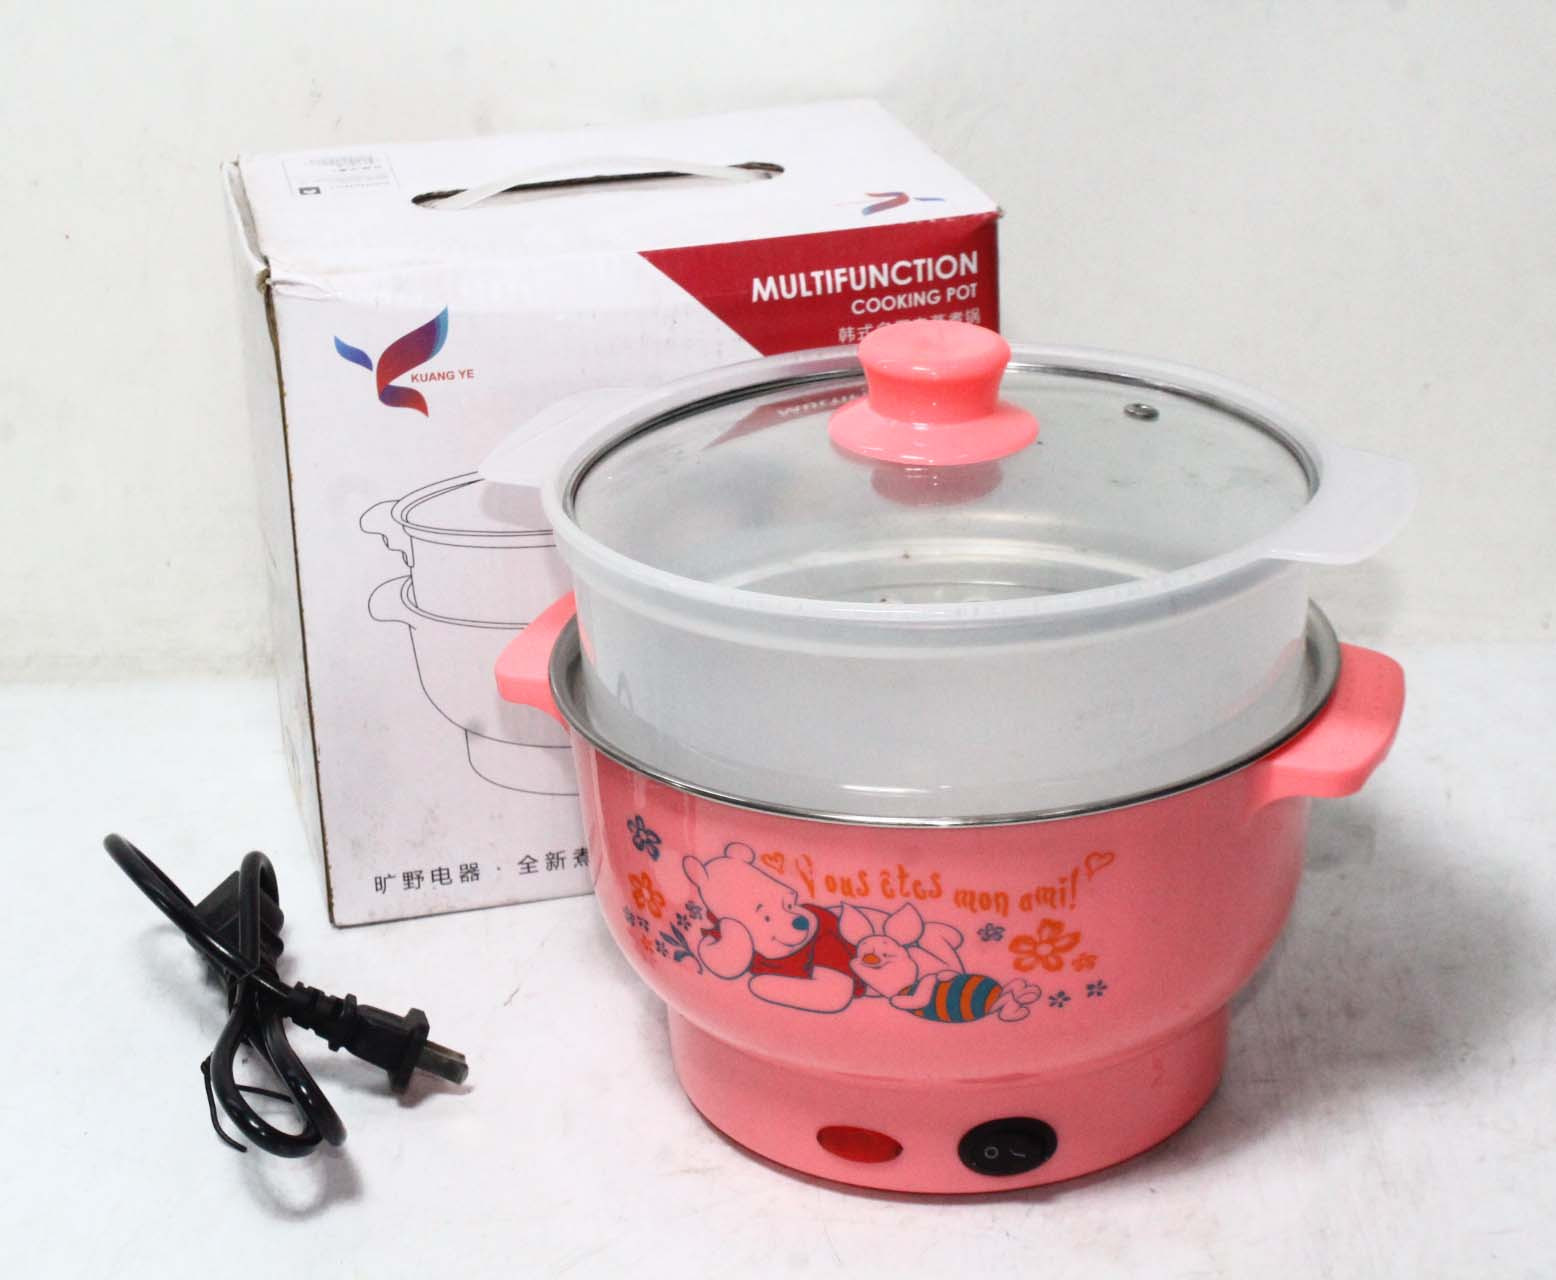 Multifunction Cooking Pot - Multifunction Cooking Pot | HMR Shop N' Bid